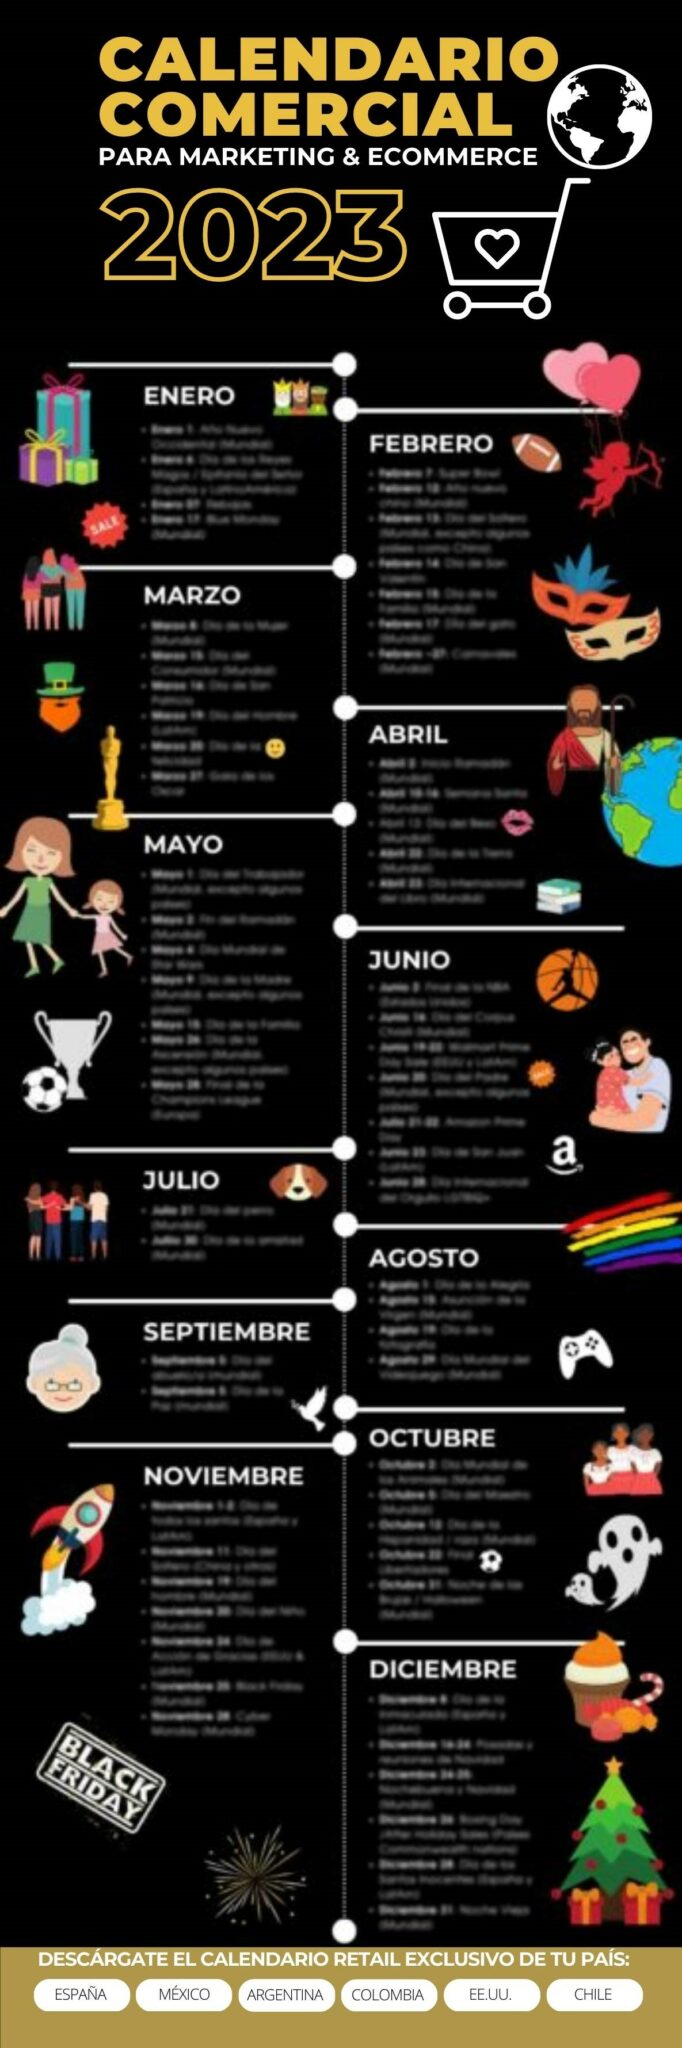 Calendario Marketing 2023 Colombia IMAGESEE